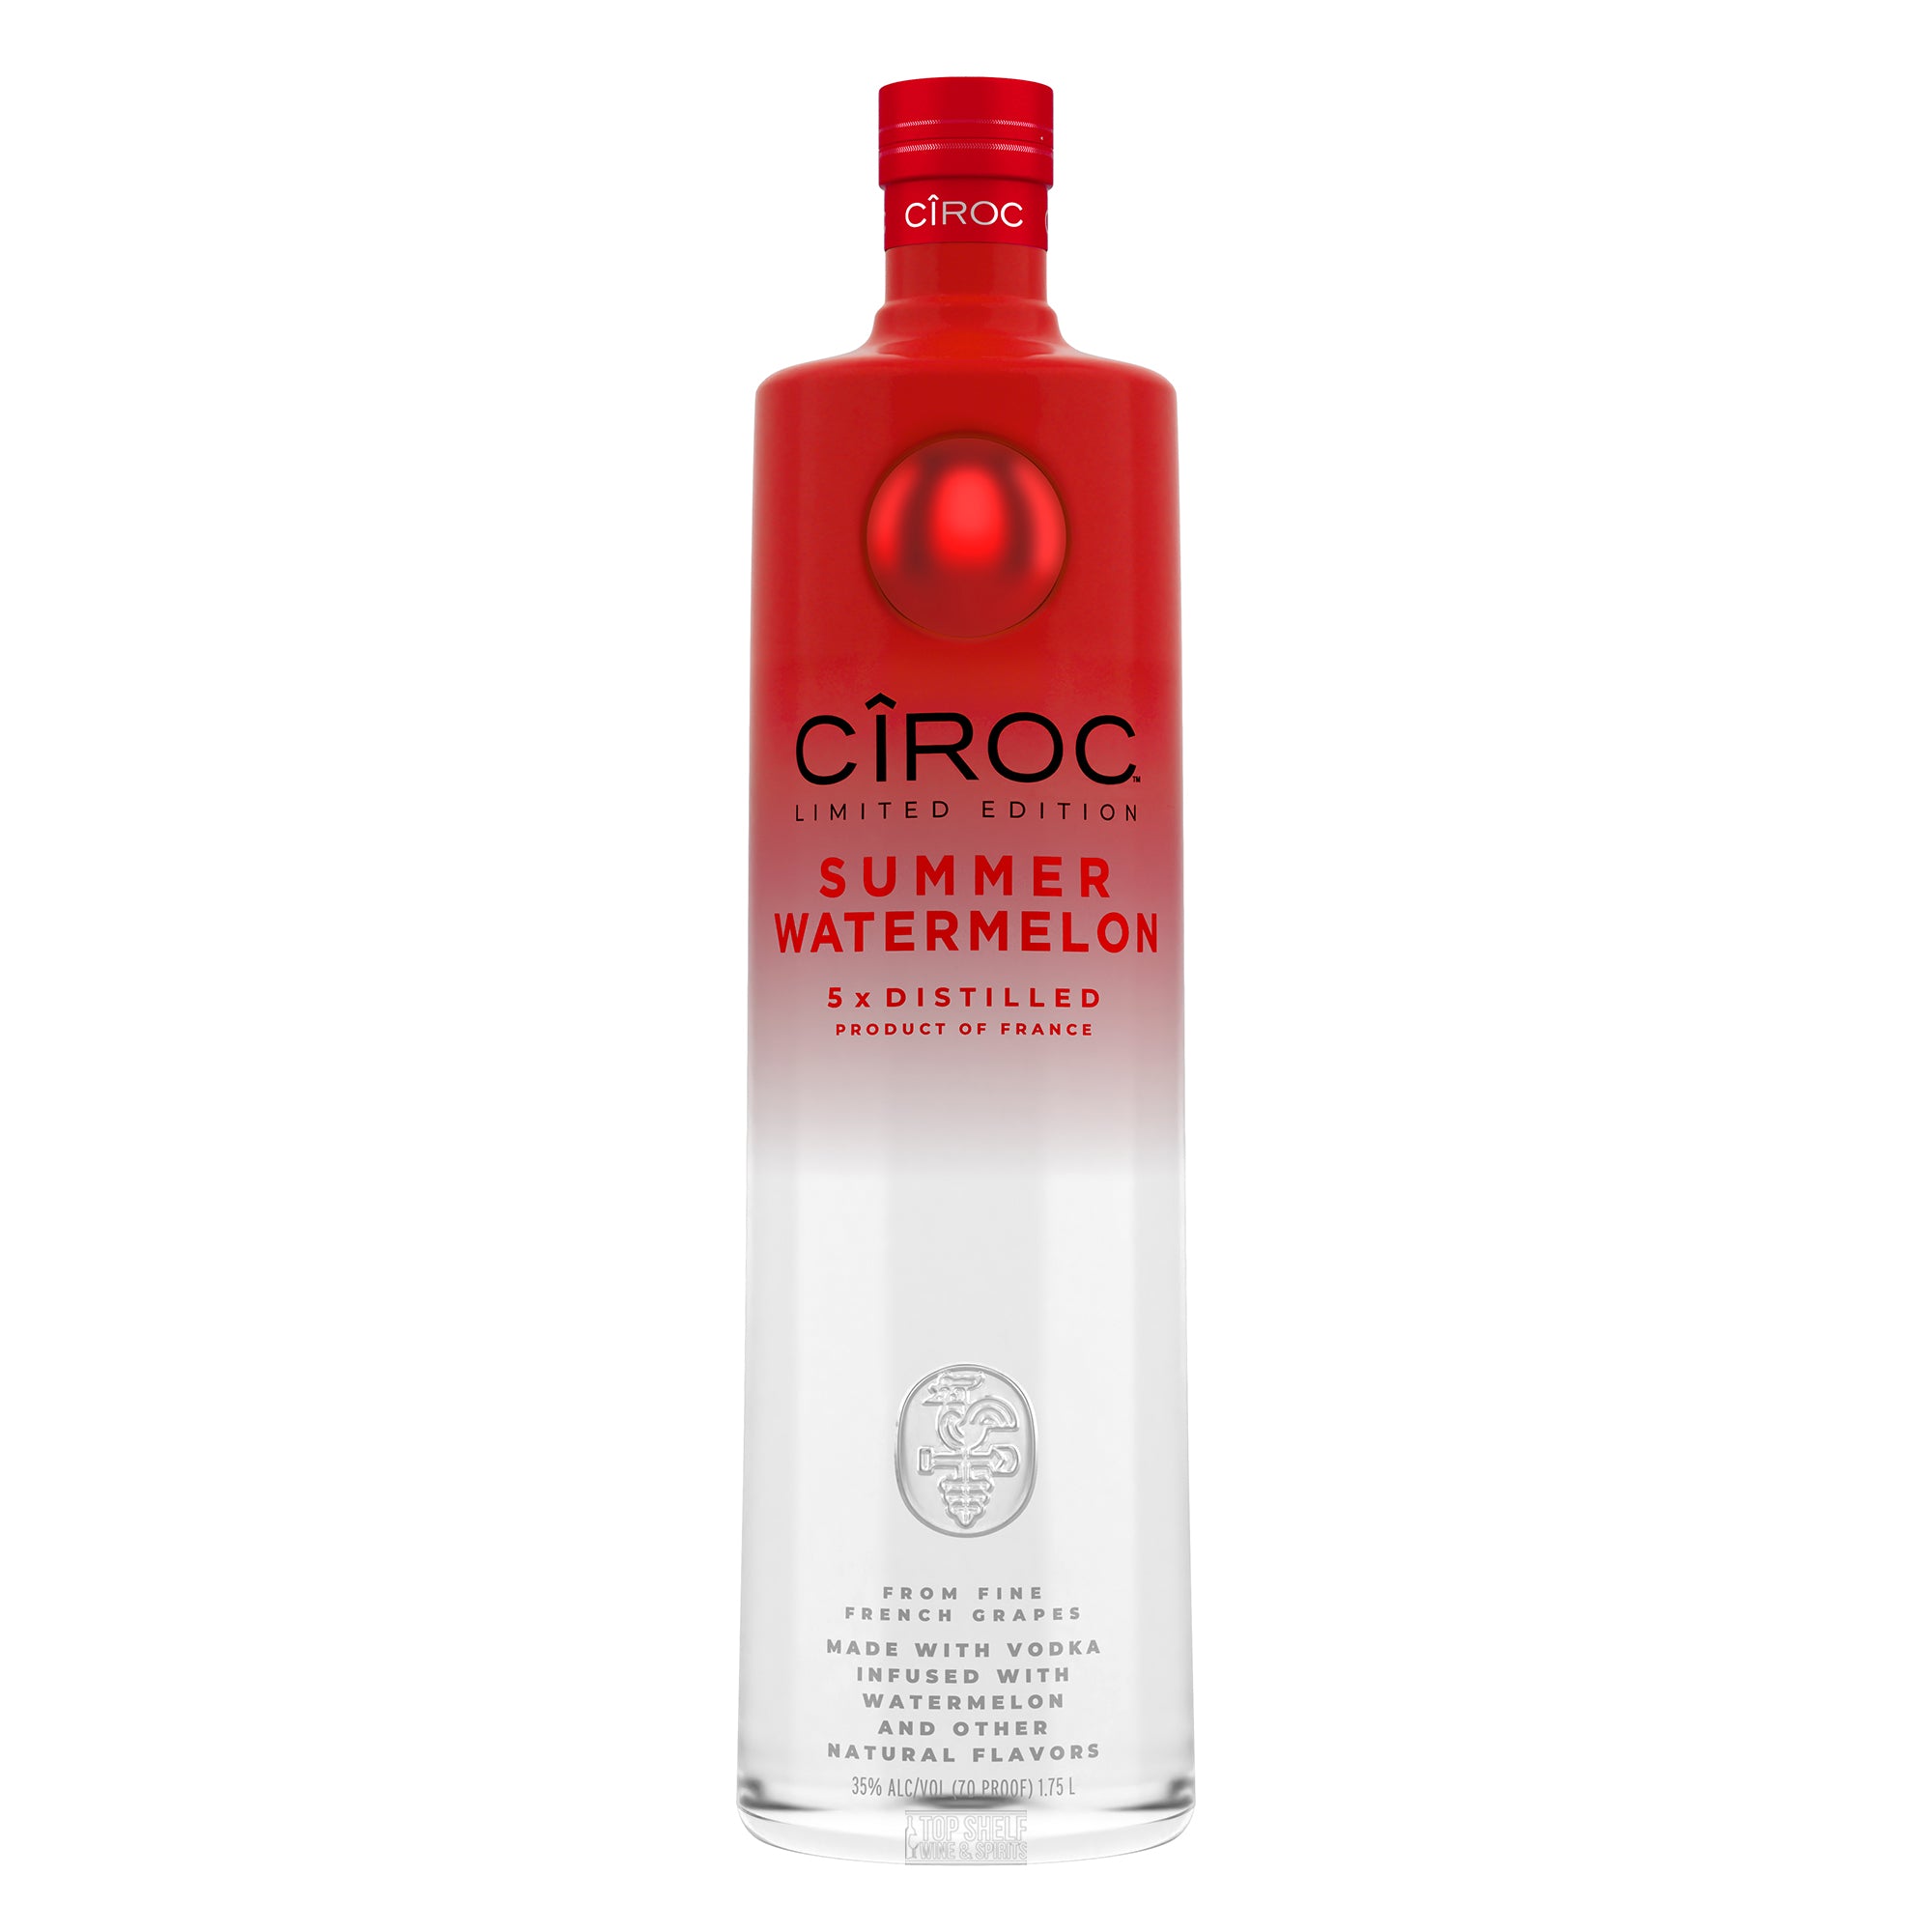 Ciroc Limited Edition Limonata Vodka 3 Pack